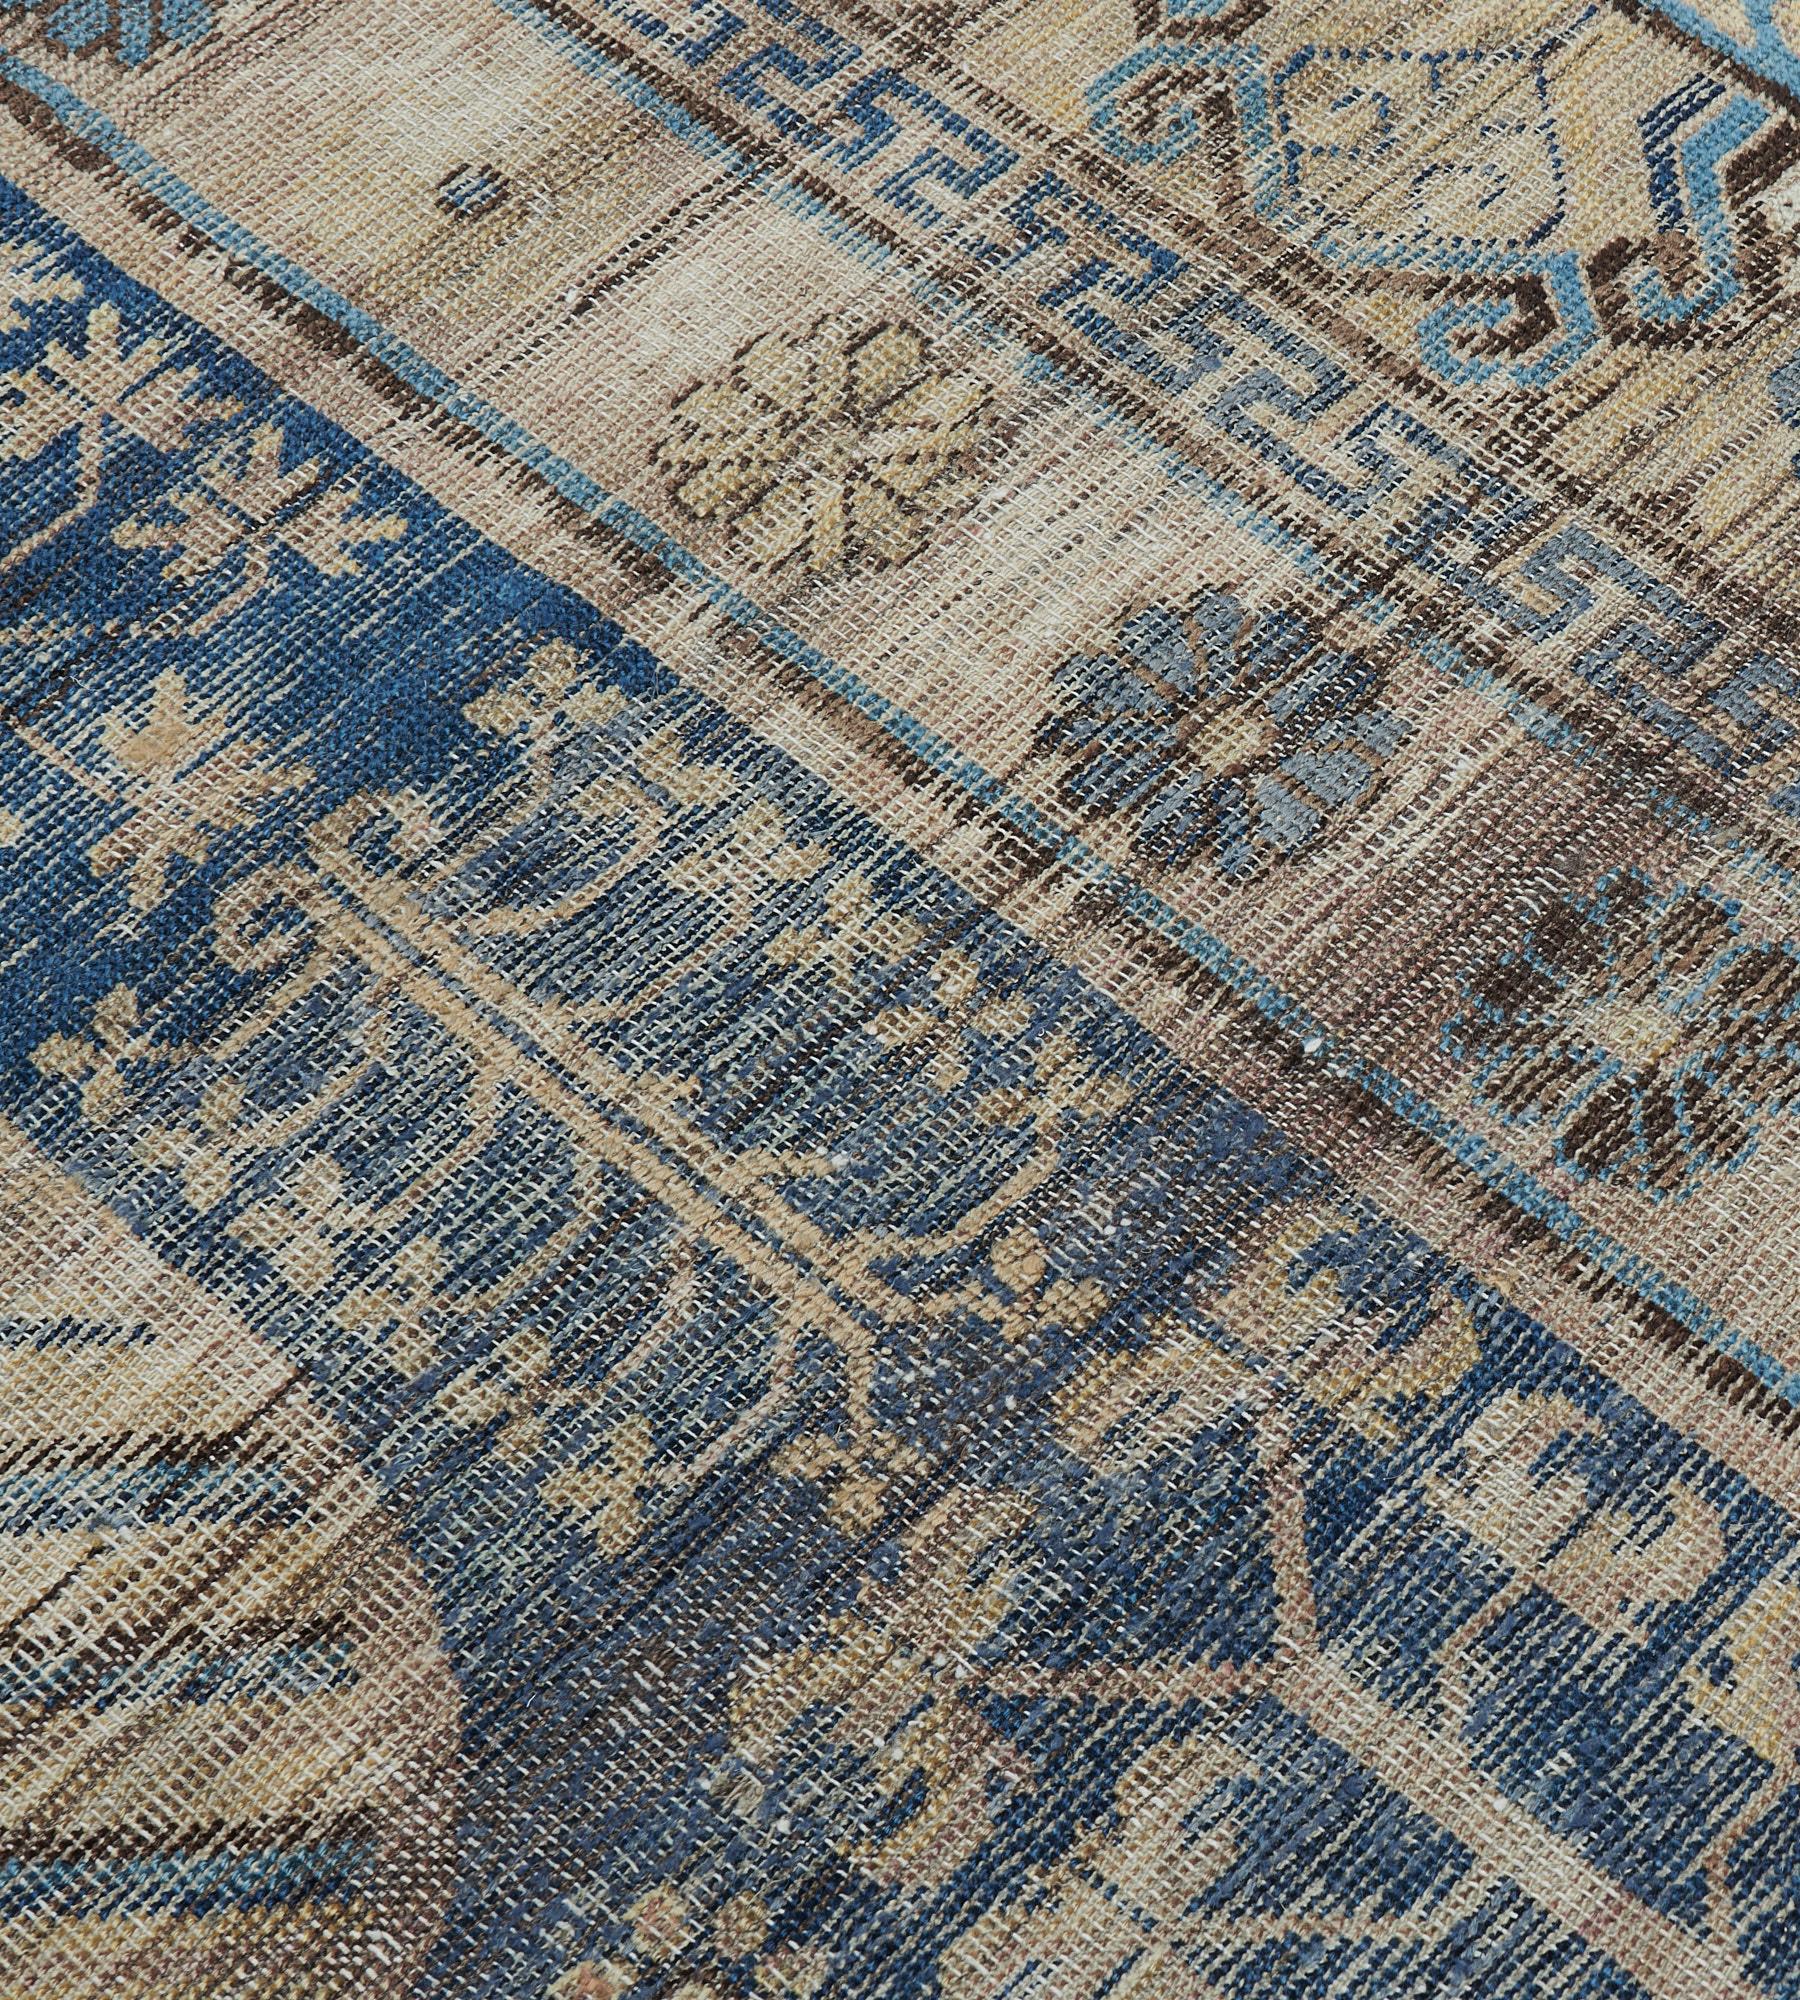 XIXe siècle Tapis Khotan bleu ancien tissé à la main du Turkestan oriental en vente